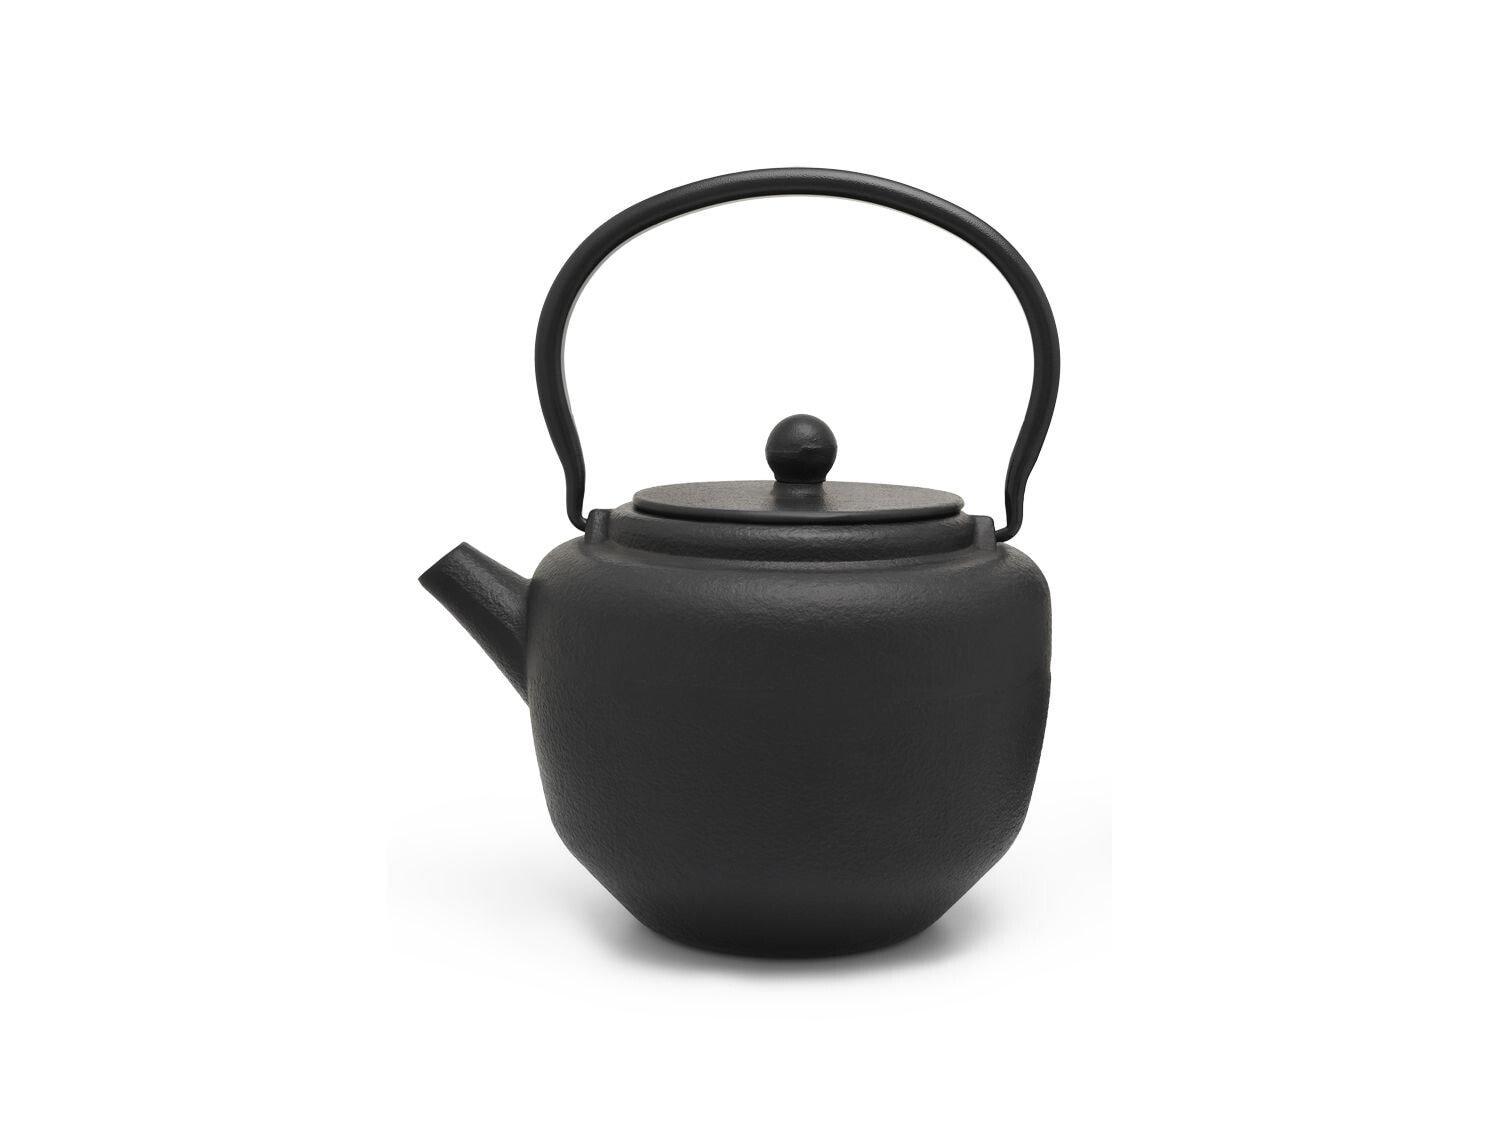 Заварочный чайник Bredemeijer Group B.V. Pucheng купить l 1.3 Group доставкой, с — Bredemeijer 13192113 недорого schwarz Teekanne